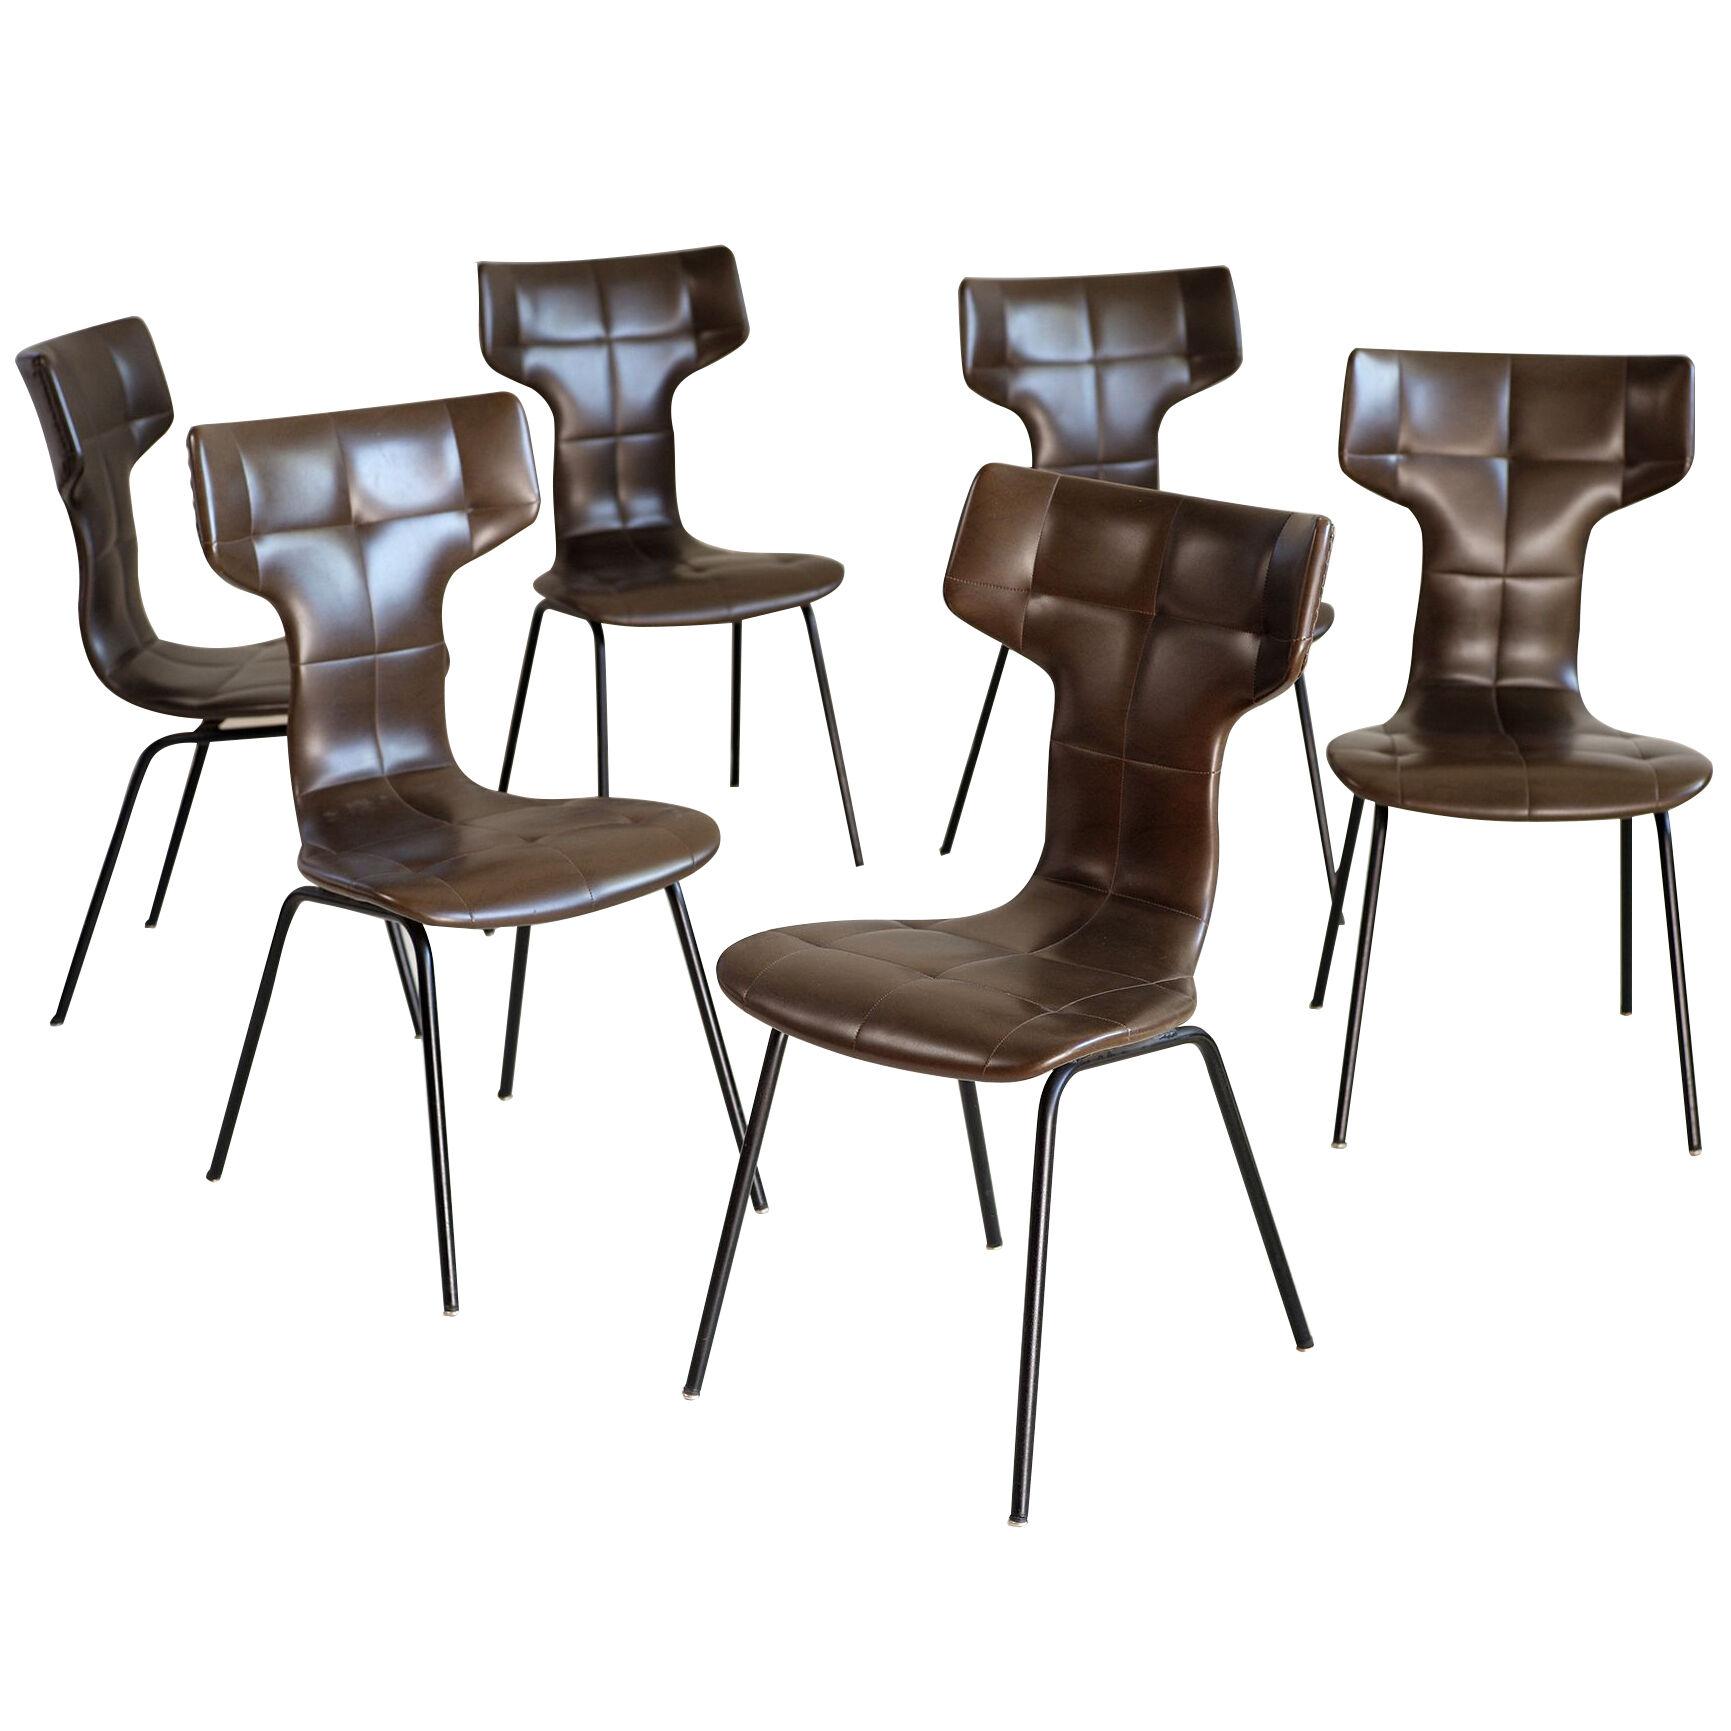 Joseph-André Motte, Set of 6 "Pelican" Chairs, France, 1960